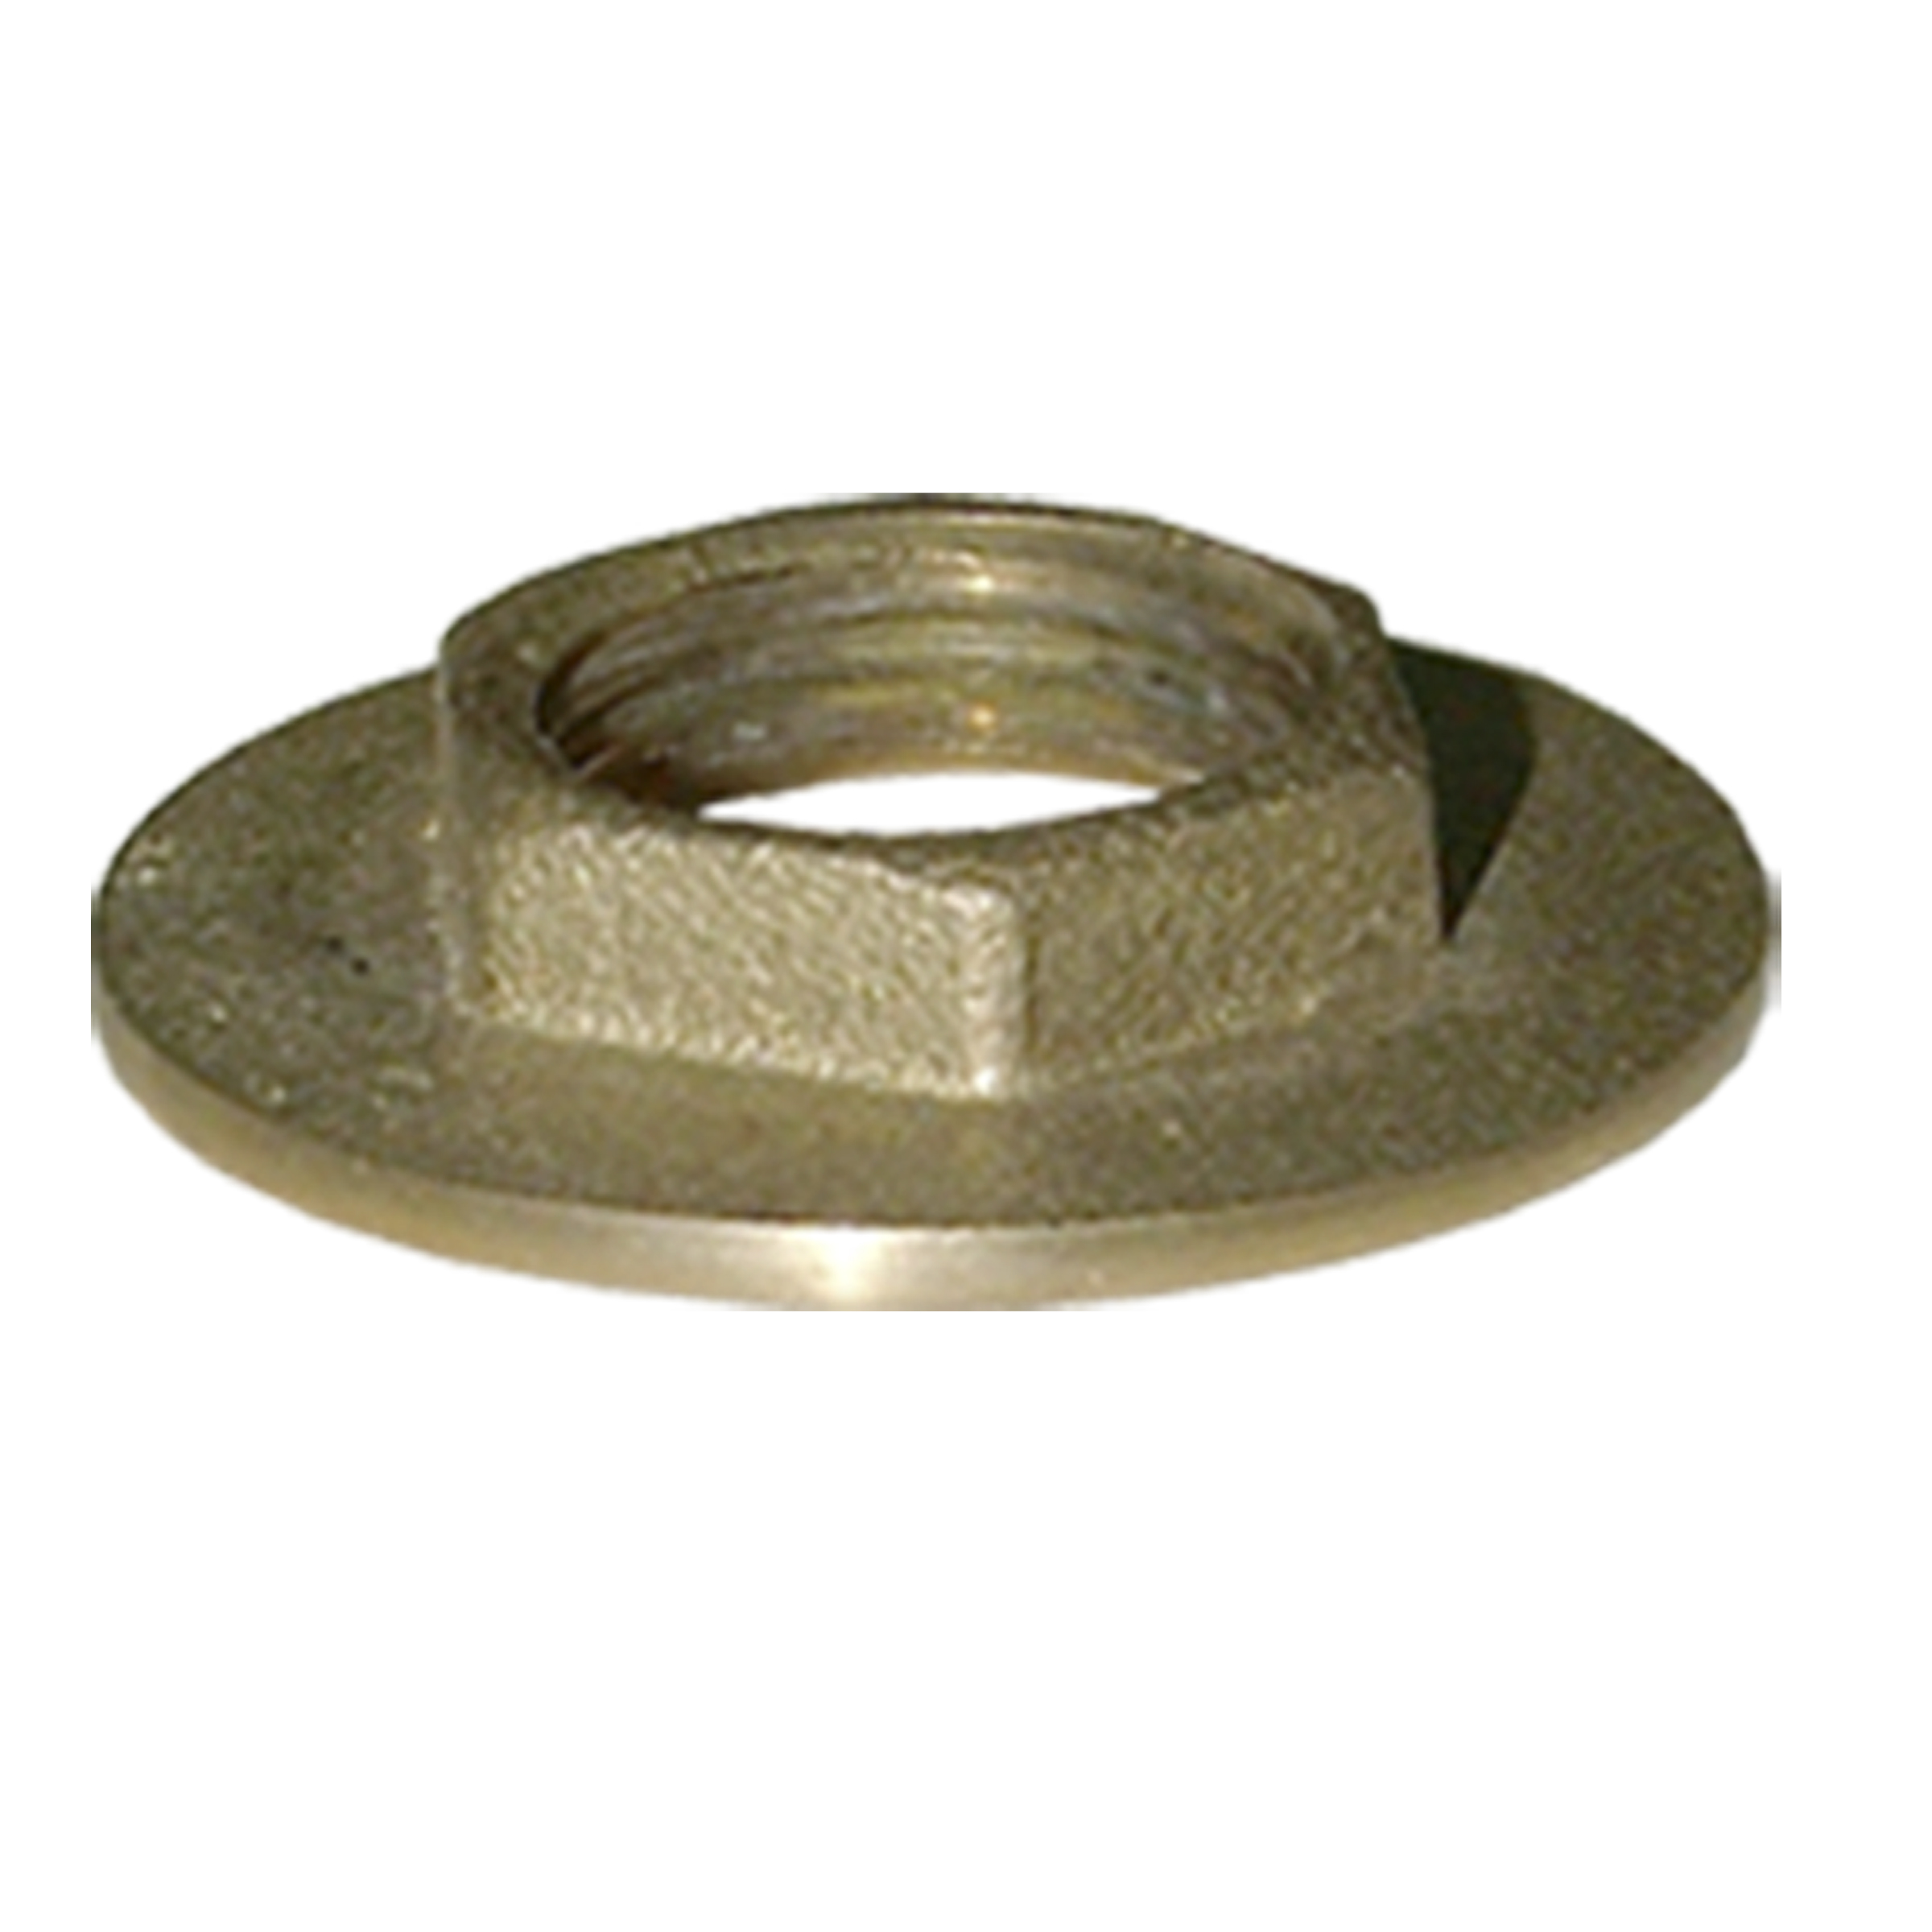 FT-0001-Brass-Jam-Nut-1-1_2-inchCold-Basin_Sink-Tap